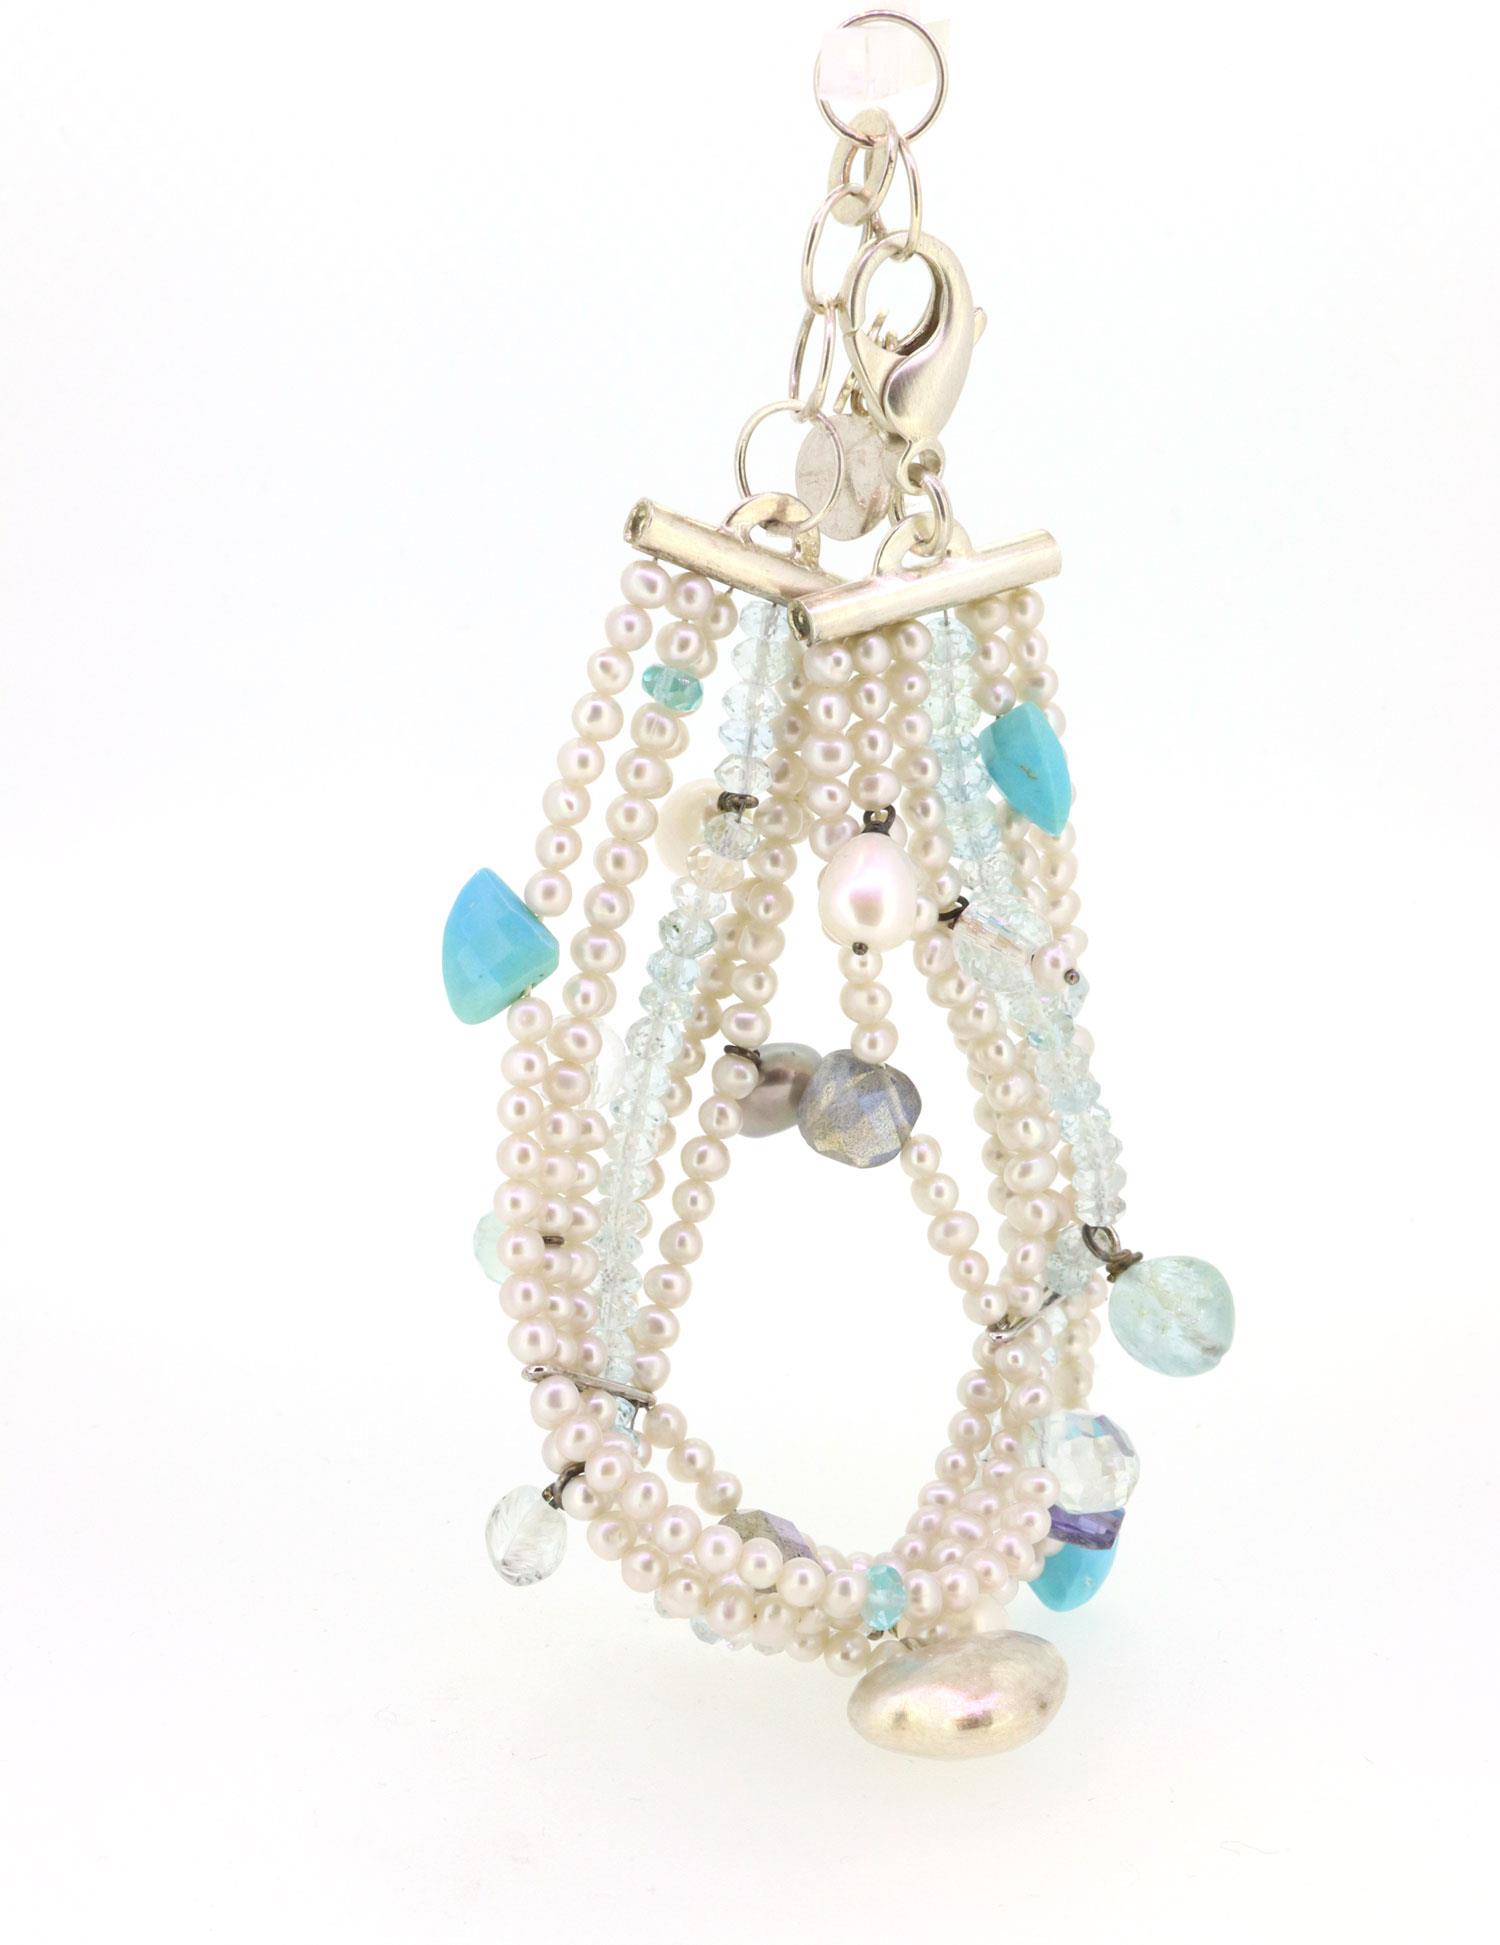 Armband Perle Aquamarin Silber - Individuelle Marken - 506weyr03-1